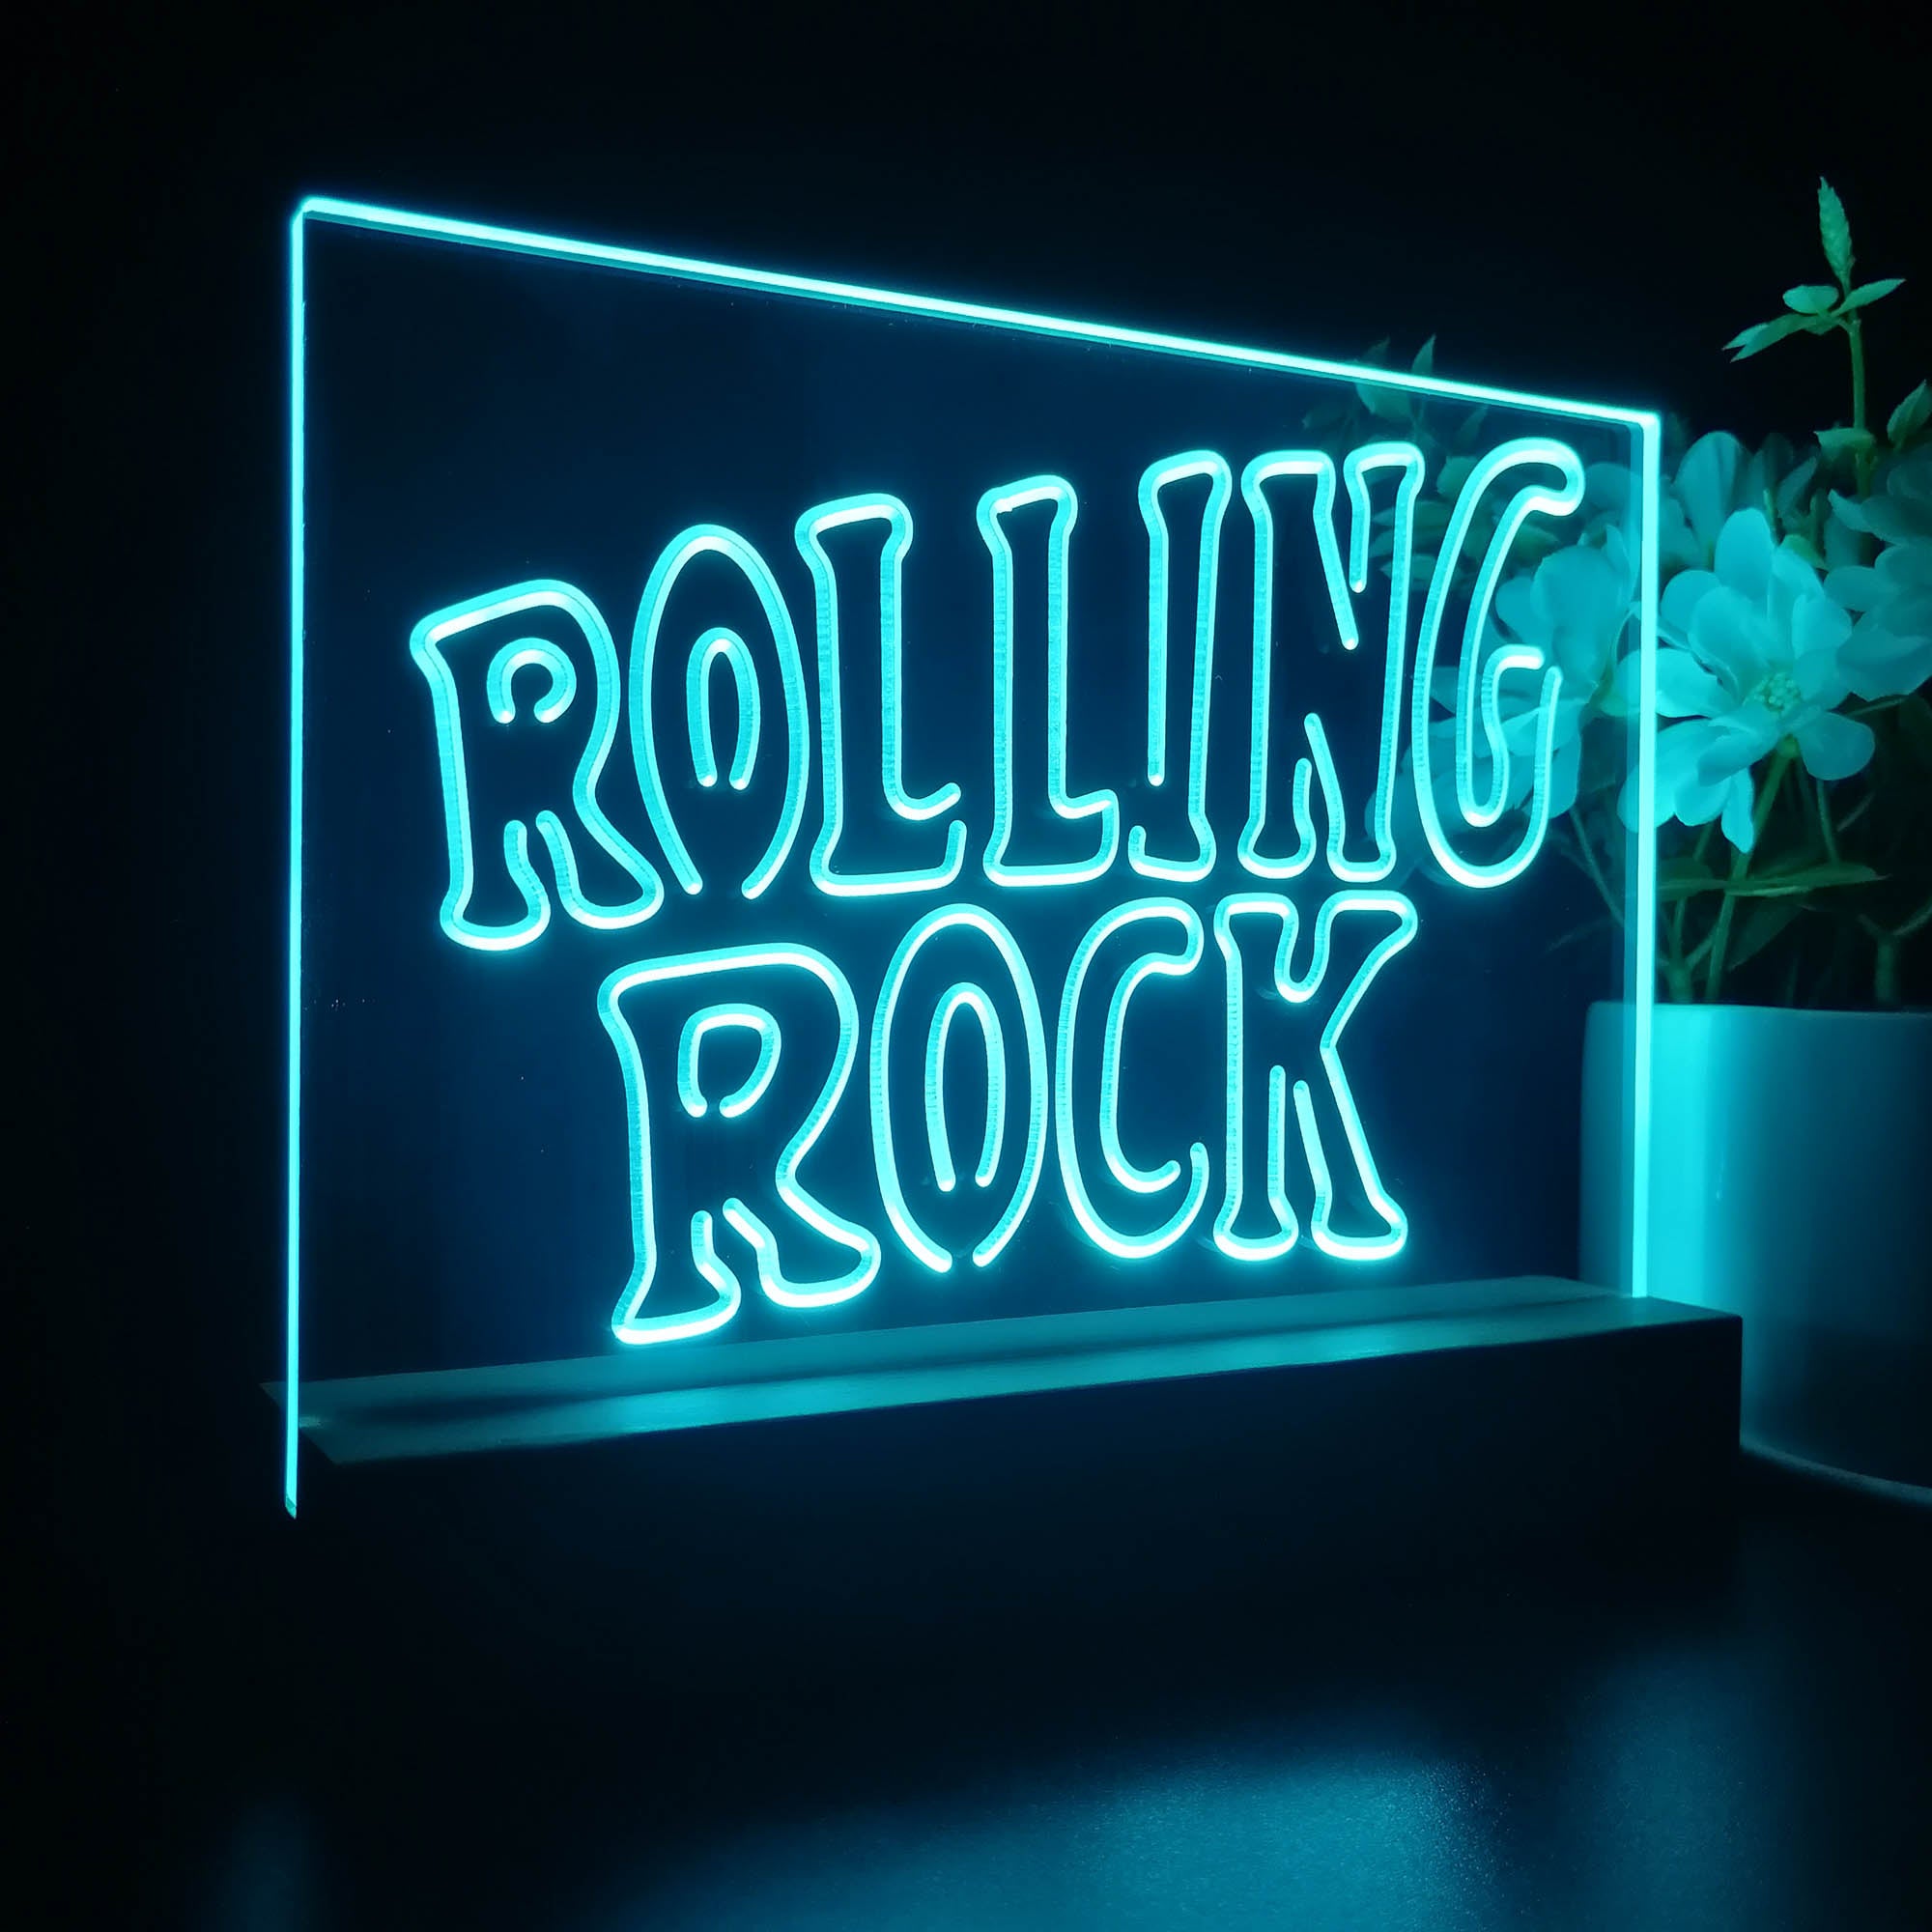 Rolling Rock Music Night Light LED Sign